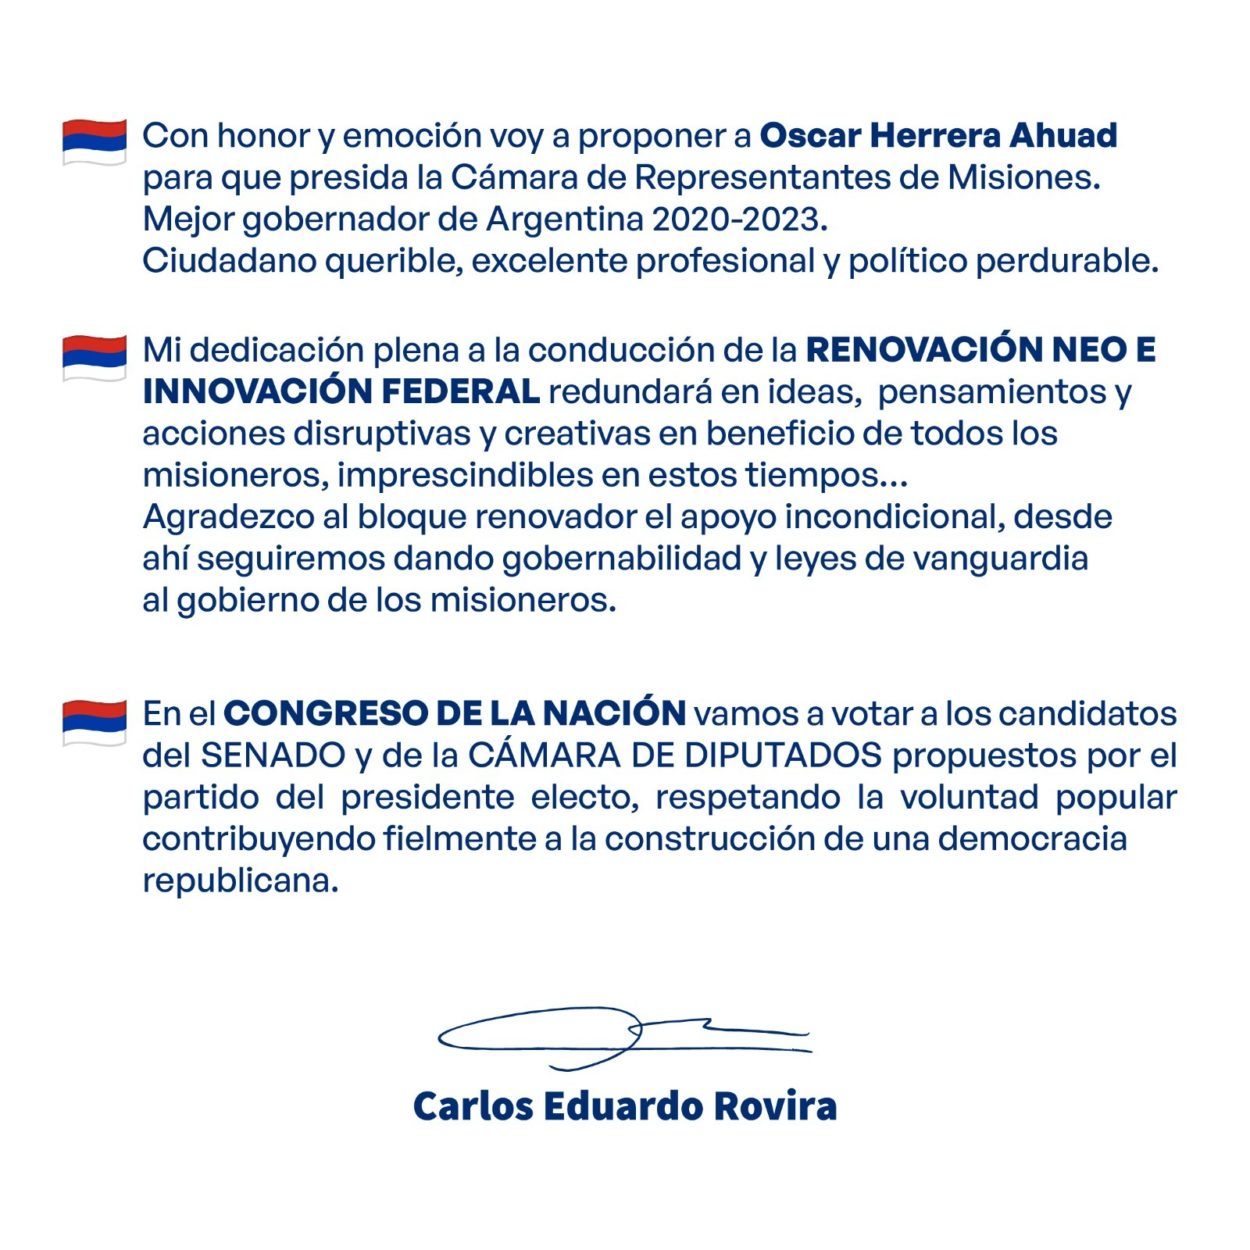 Herrera Ahuad agradeció a Rovira por nominarlo para presidir la Legislatura imagen-4